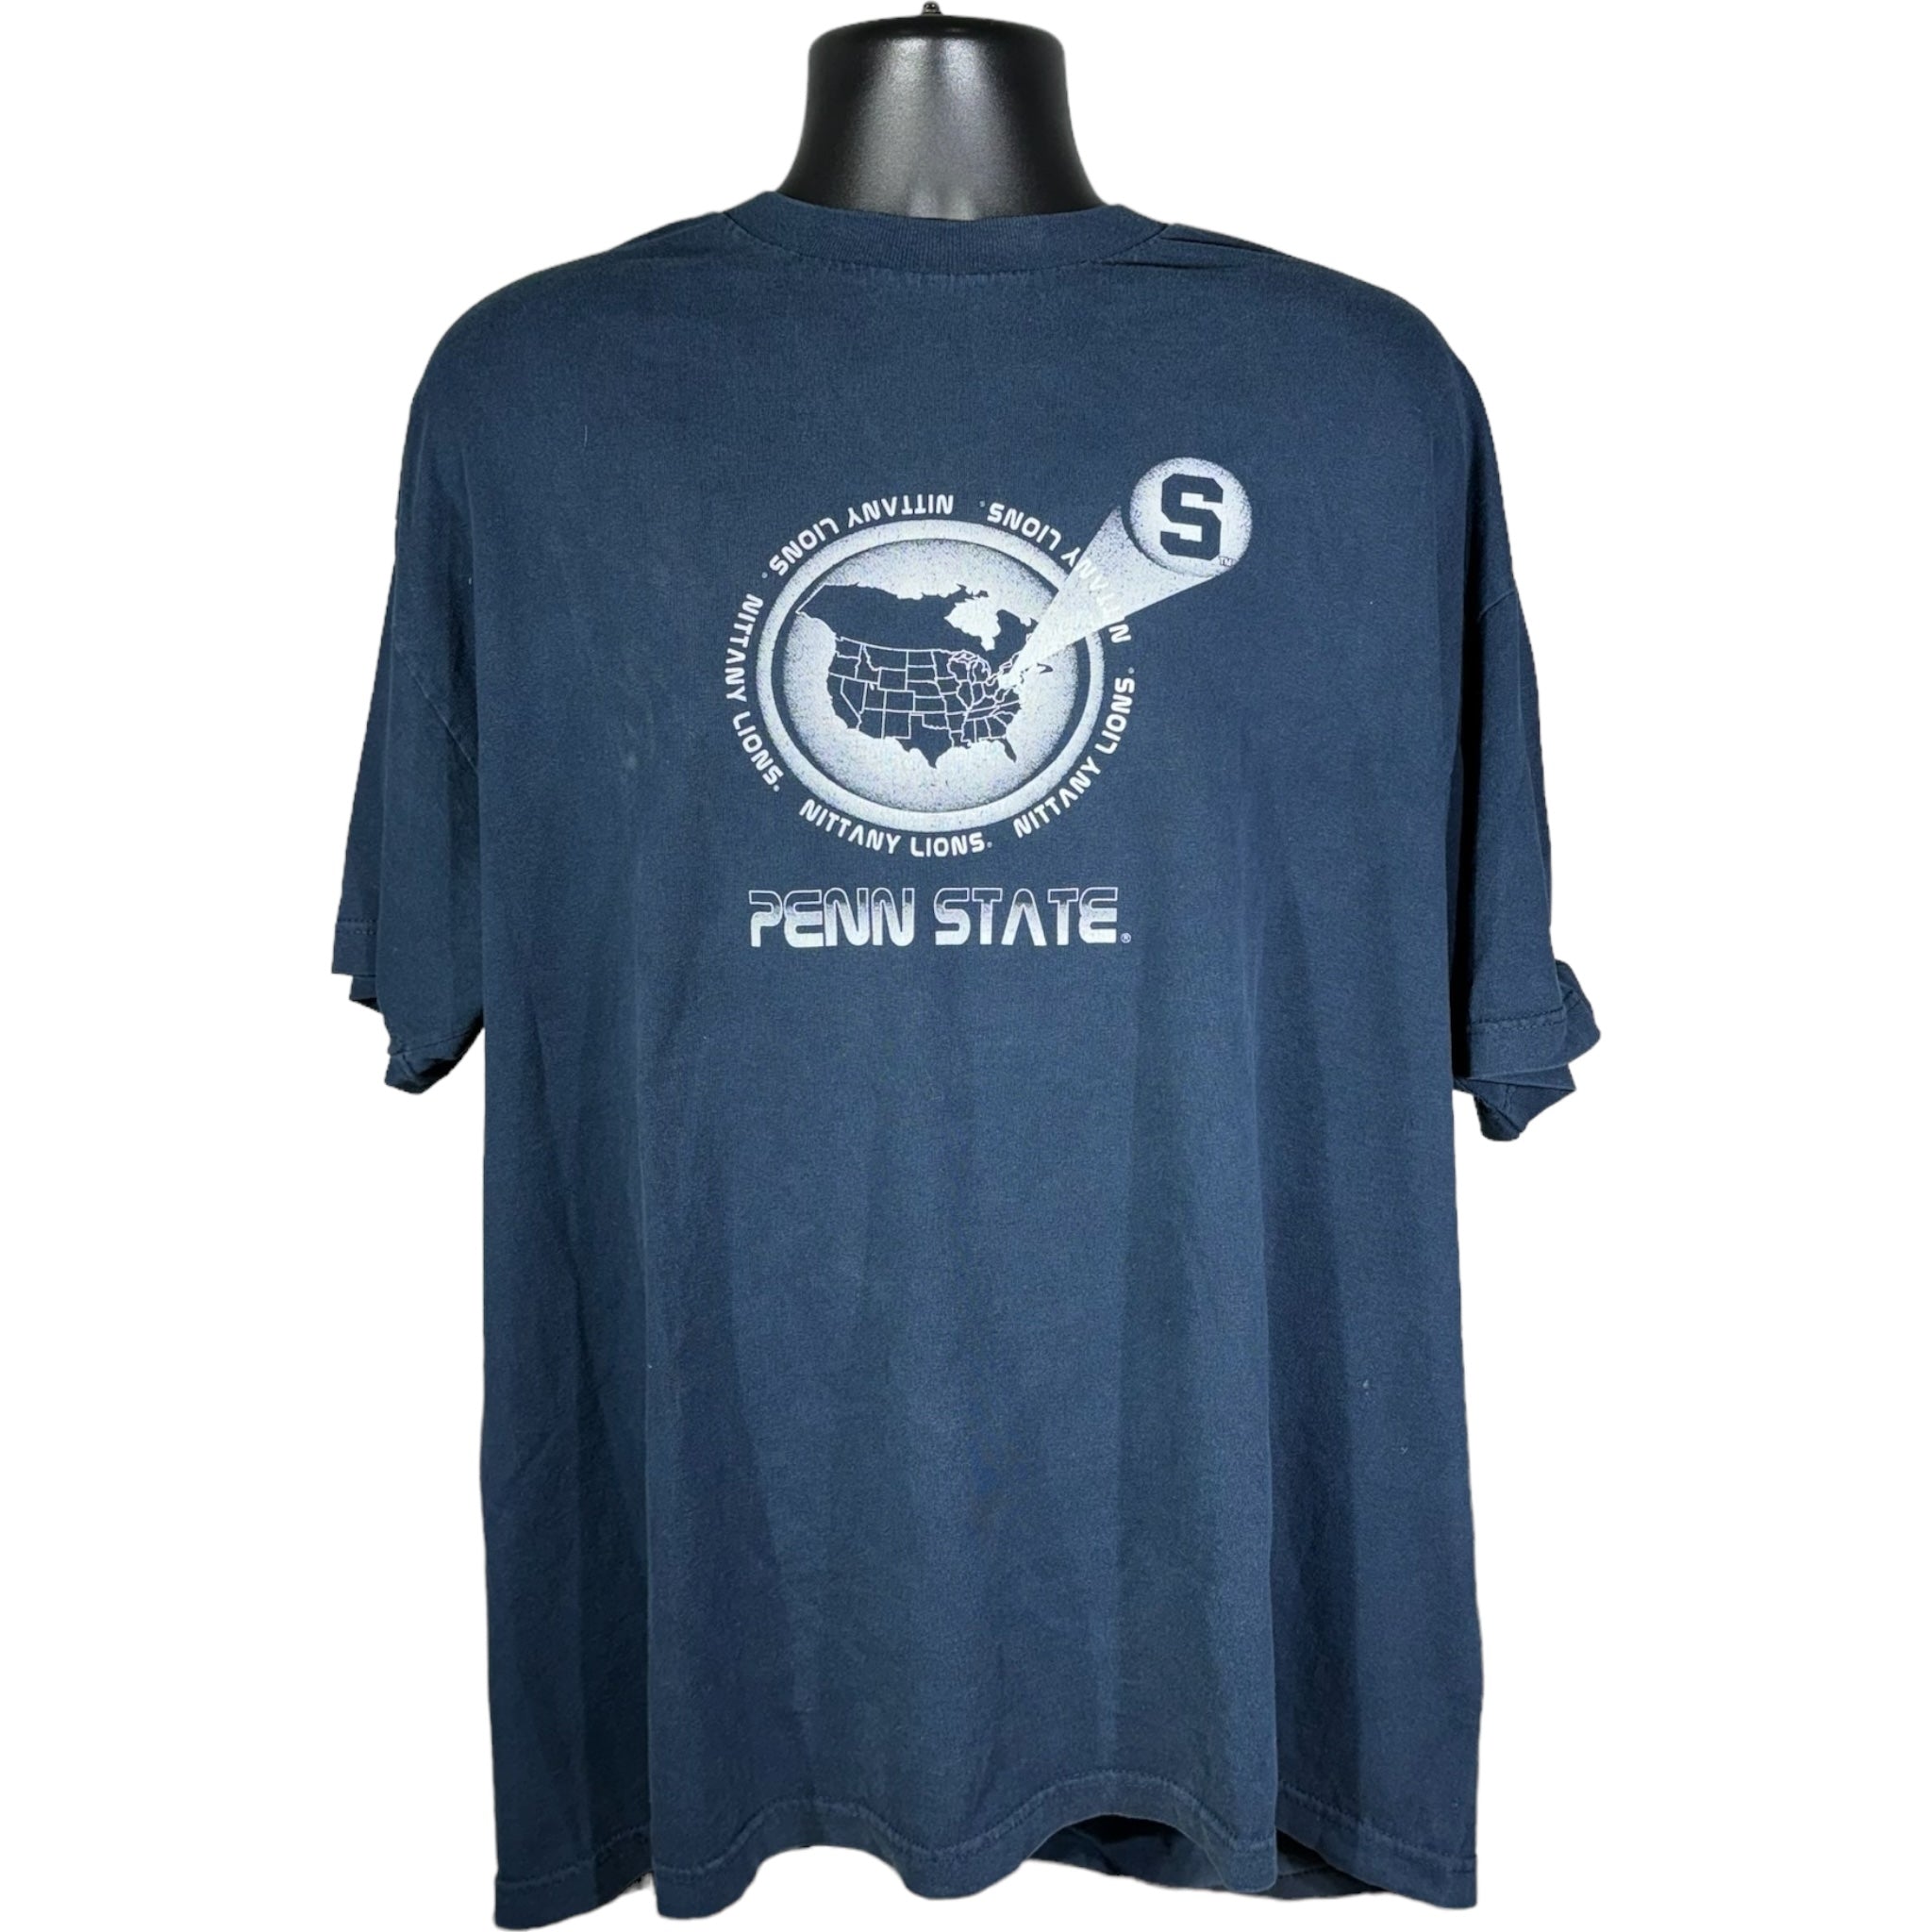 Vintage Penn State Nittany Lions Tee